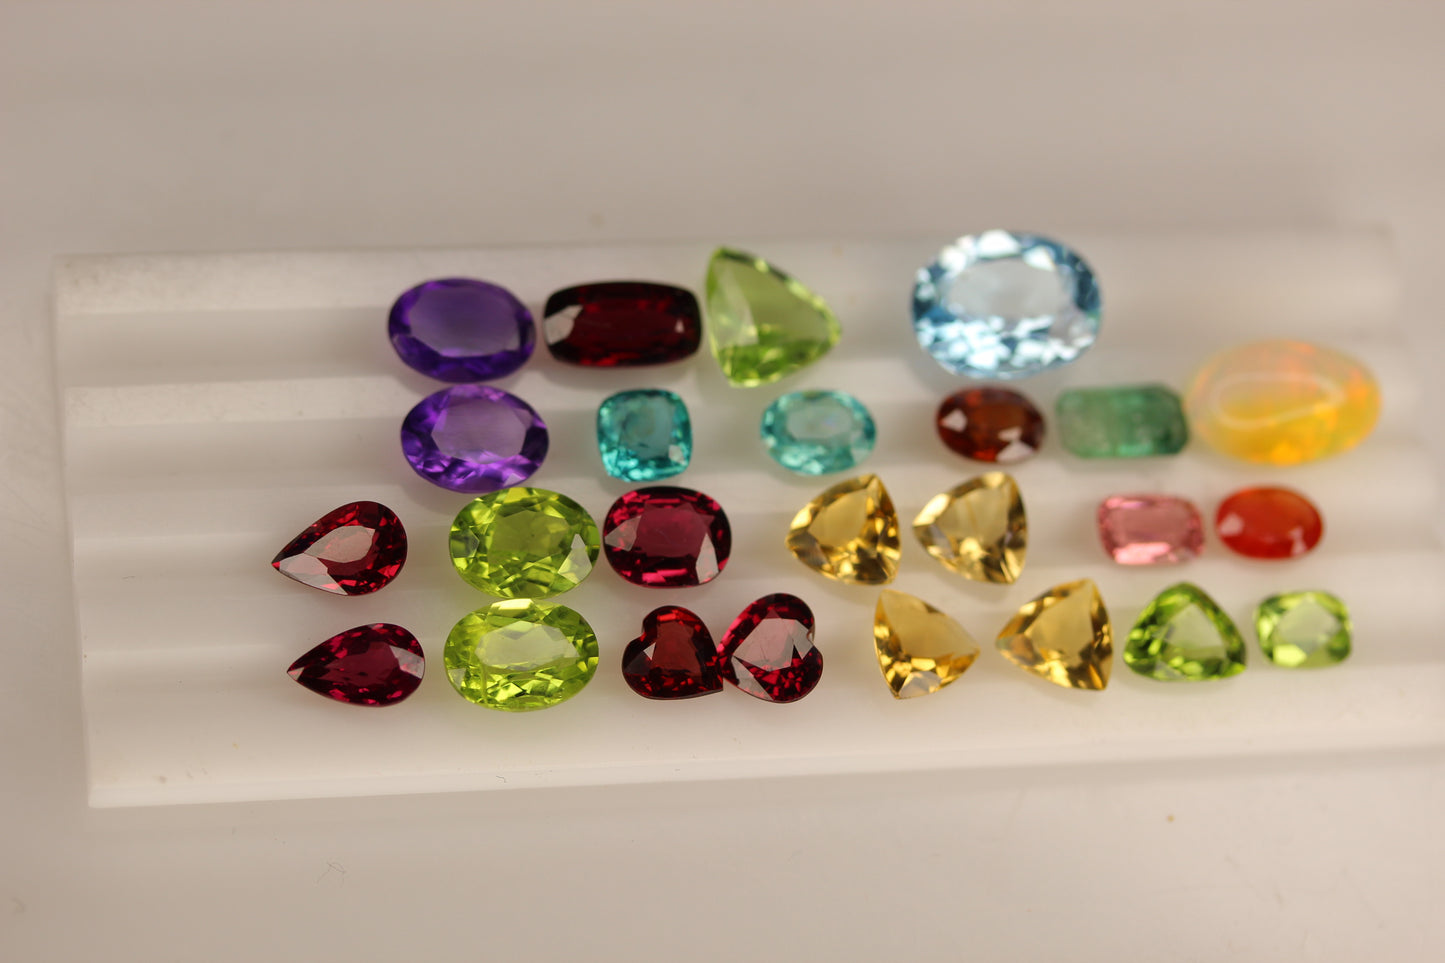 37 carats Loose Stones Peridots Opal Topaz Amethyst Citrine Apatite Zircon Garnetz Tourmaline Sapphire